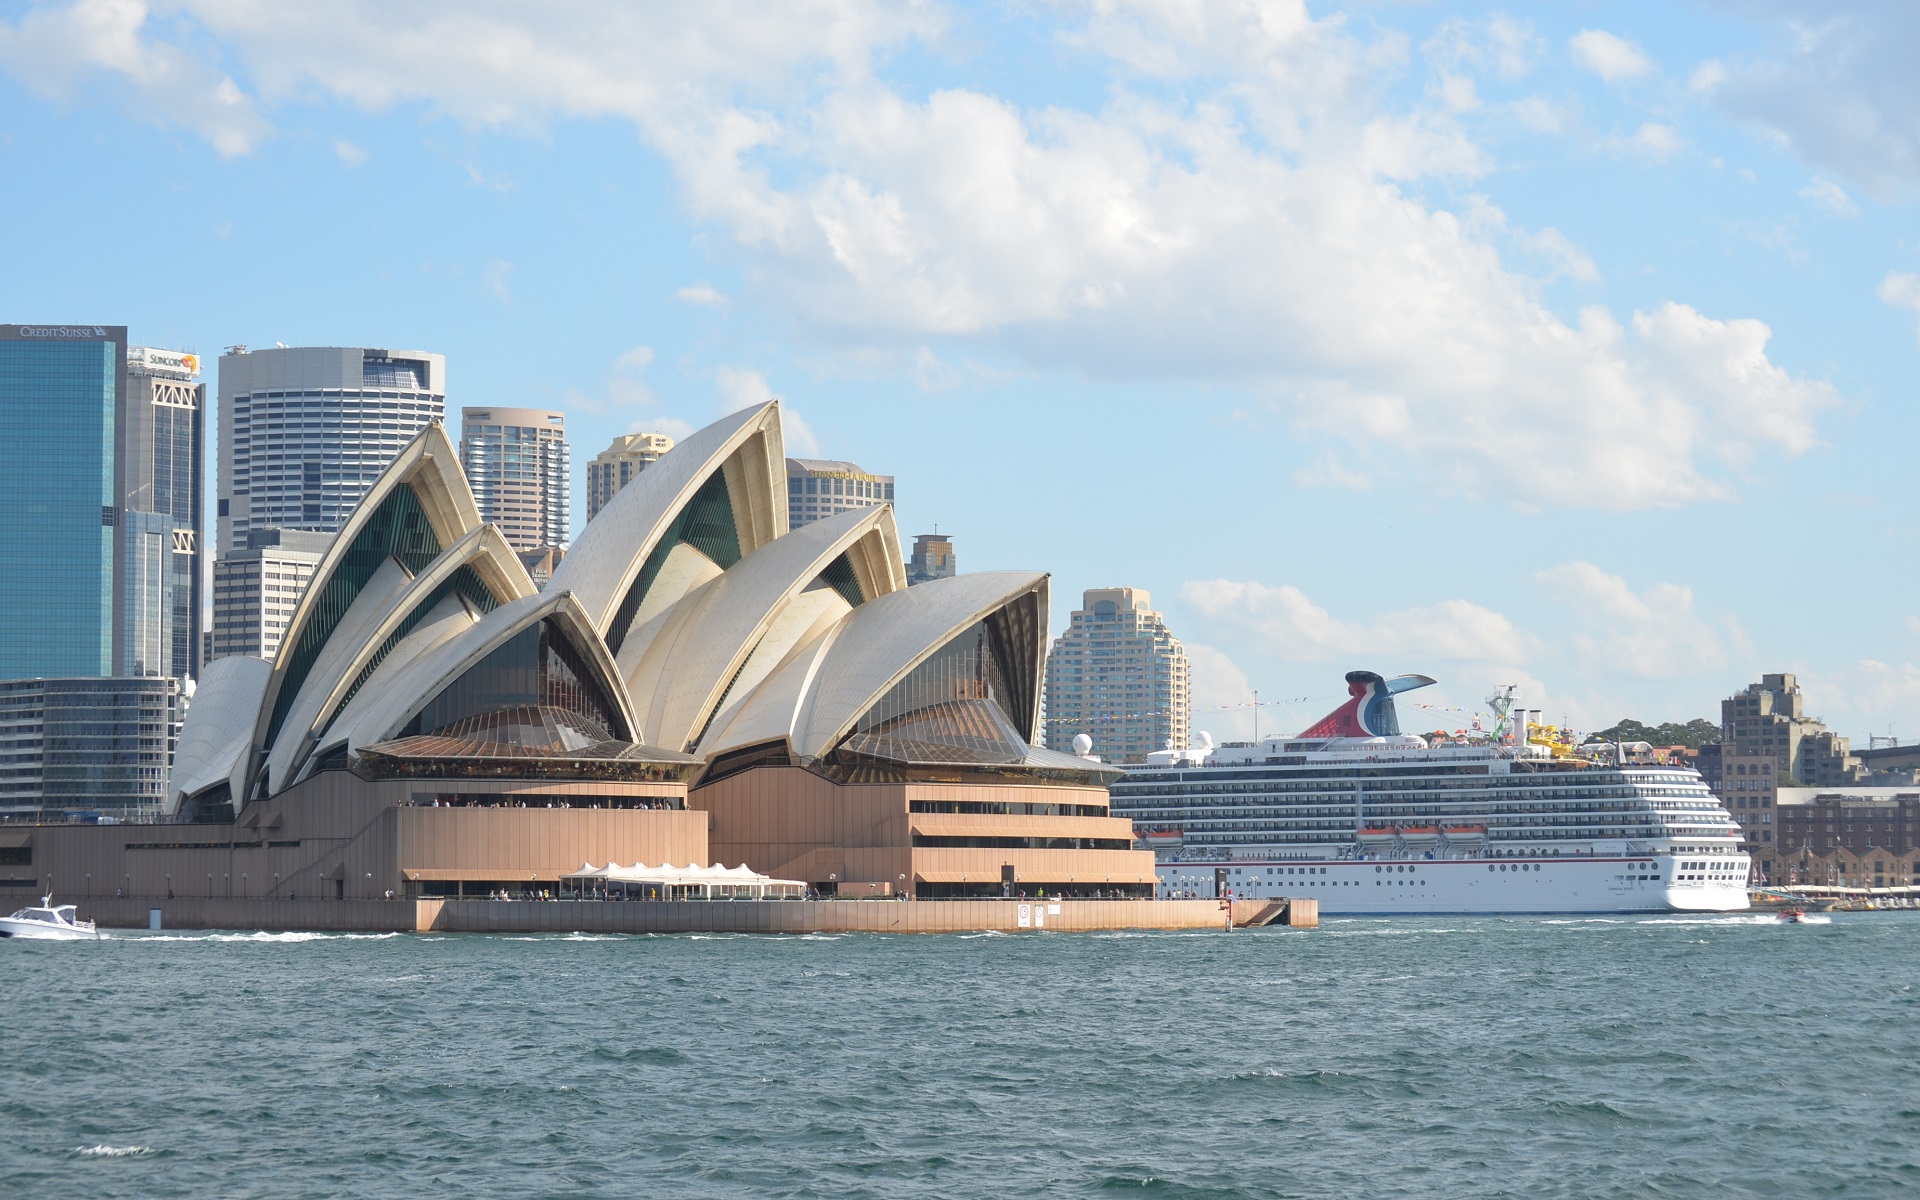 PC Wallpapers australia, sydney opera house, sydney, man made, carnival spirit, city, cruise ship